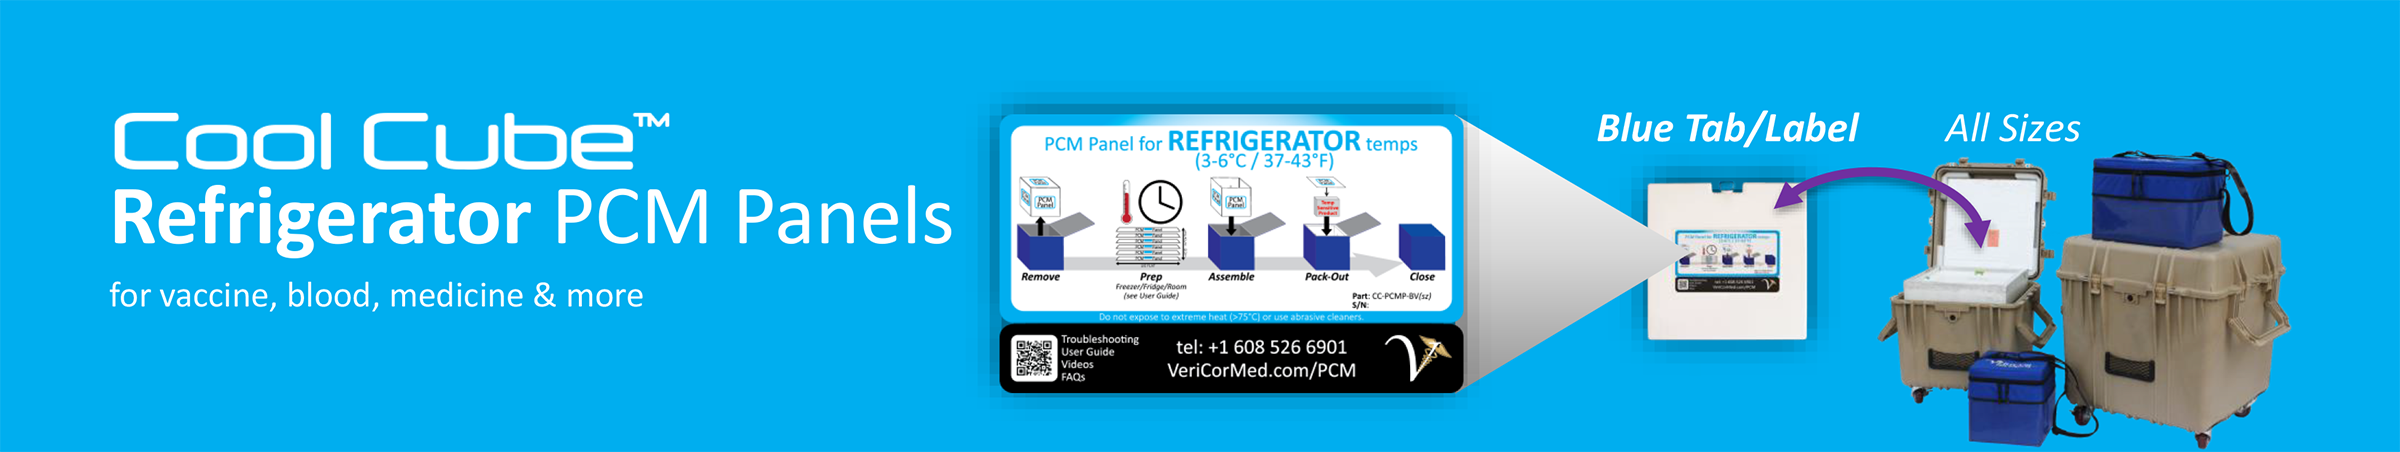 All - Refrigerator PCM Prep Methods